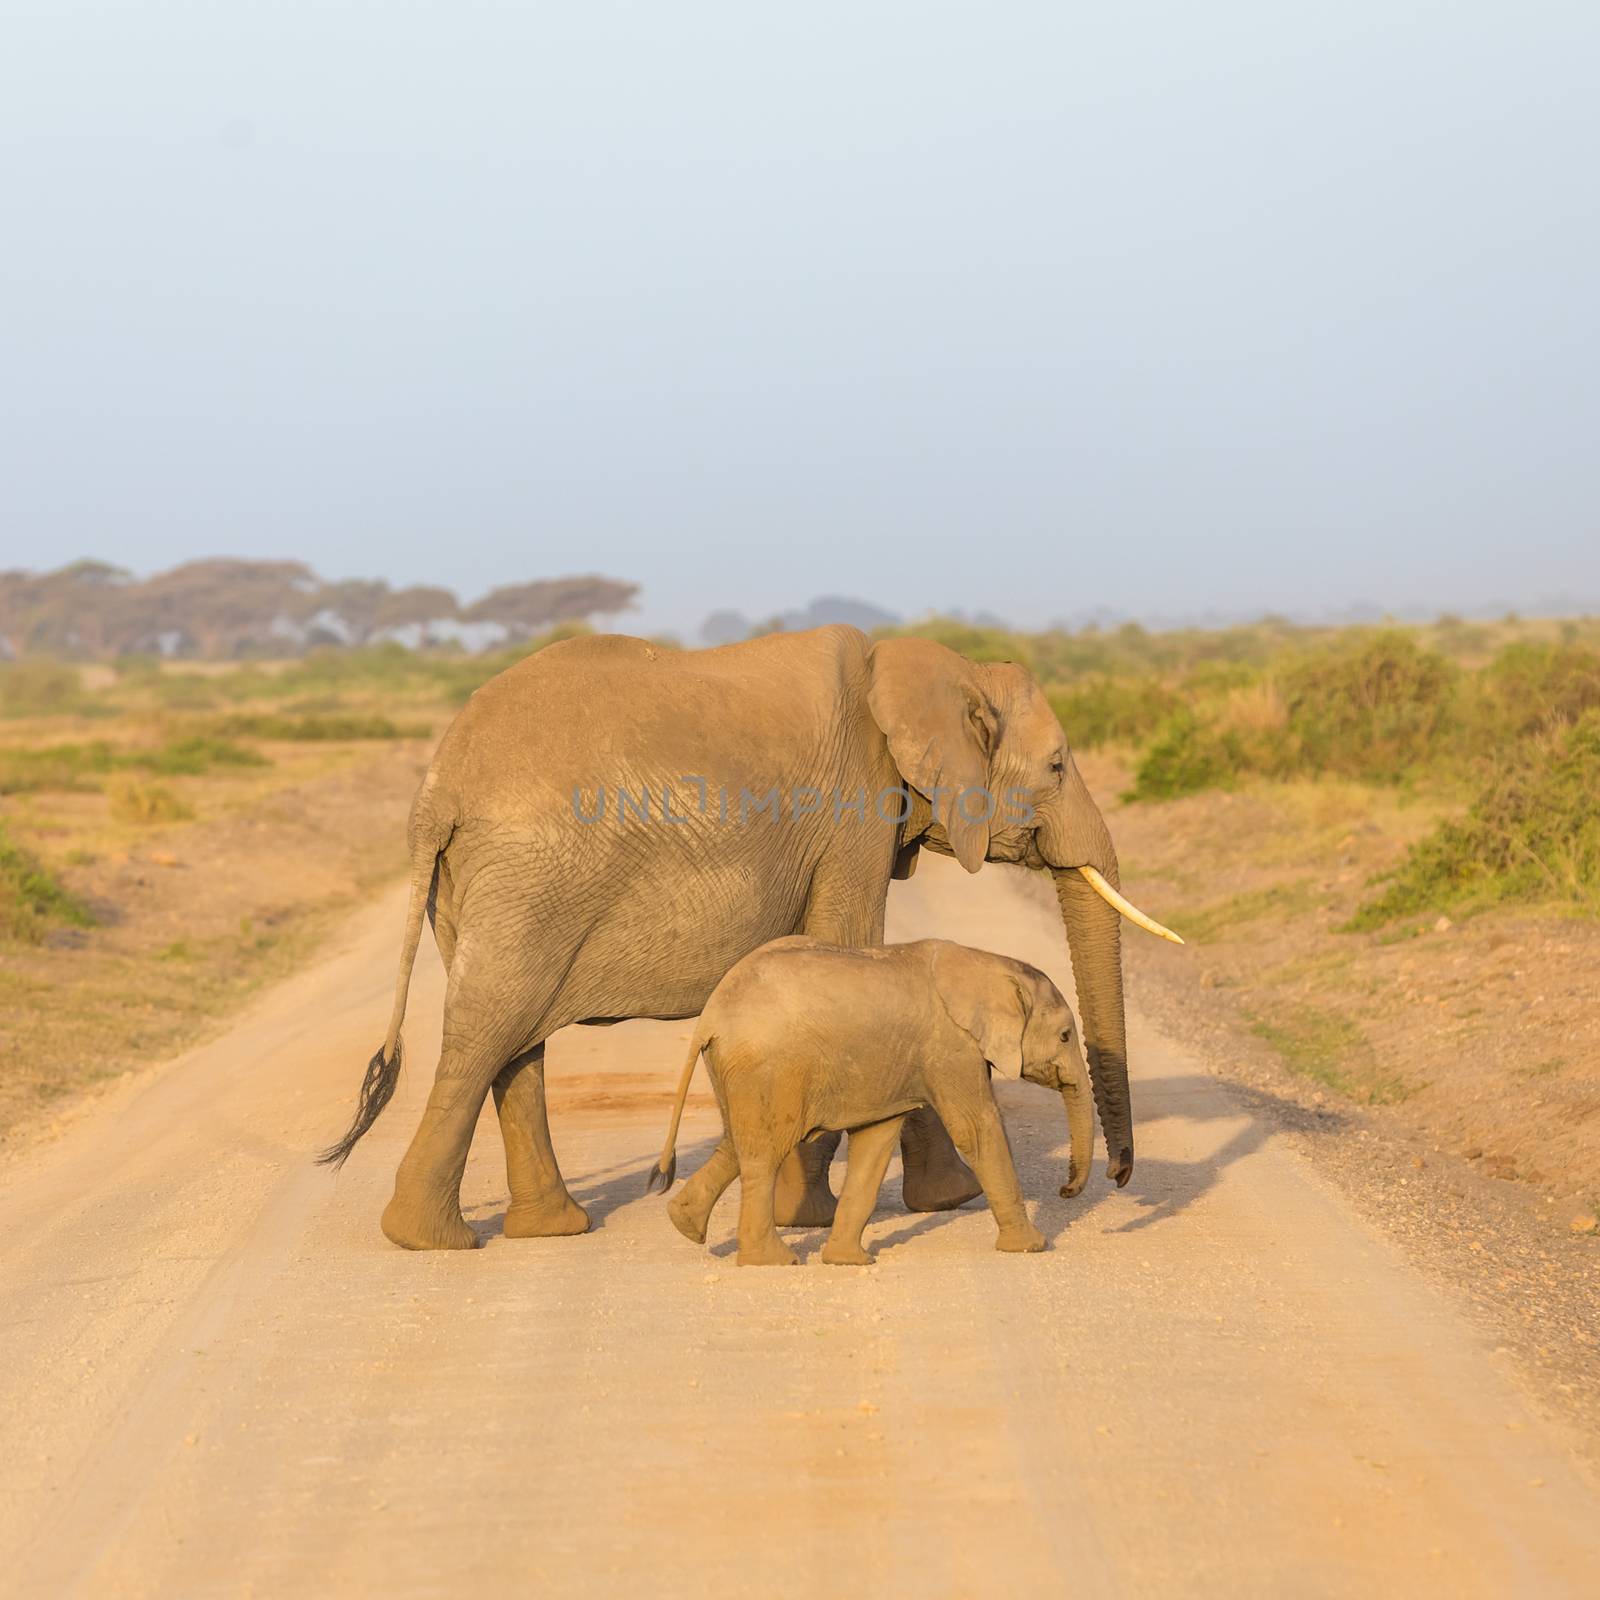 Female elephant with her calf crossing dirt road in Amboseli national park in Kenya, Africa.